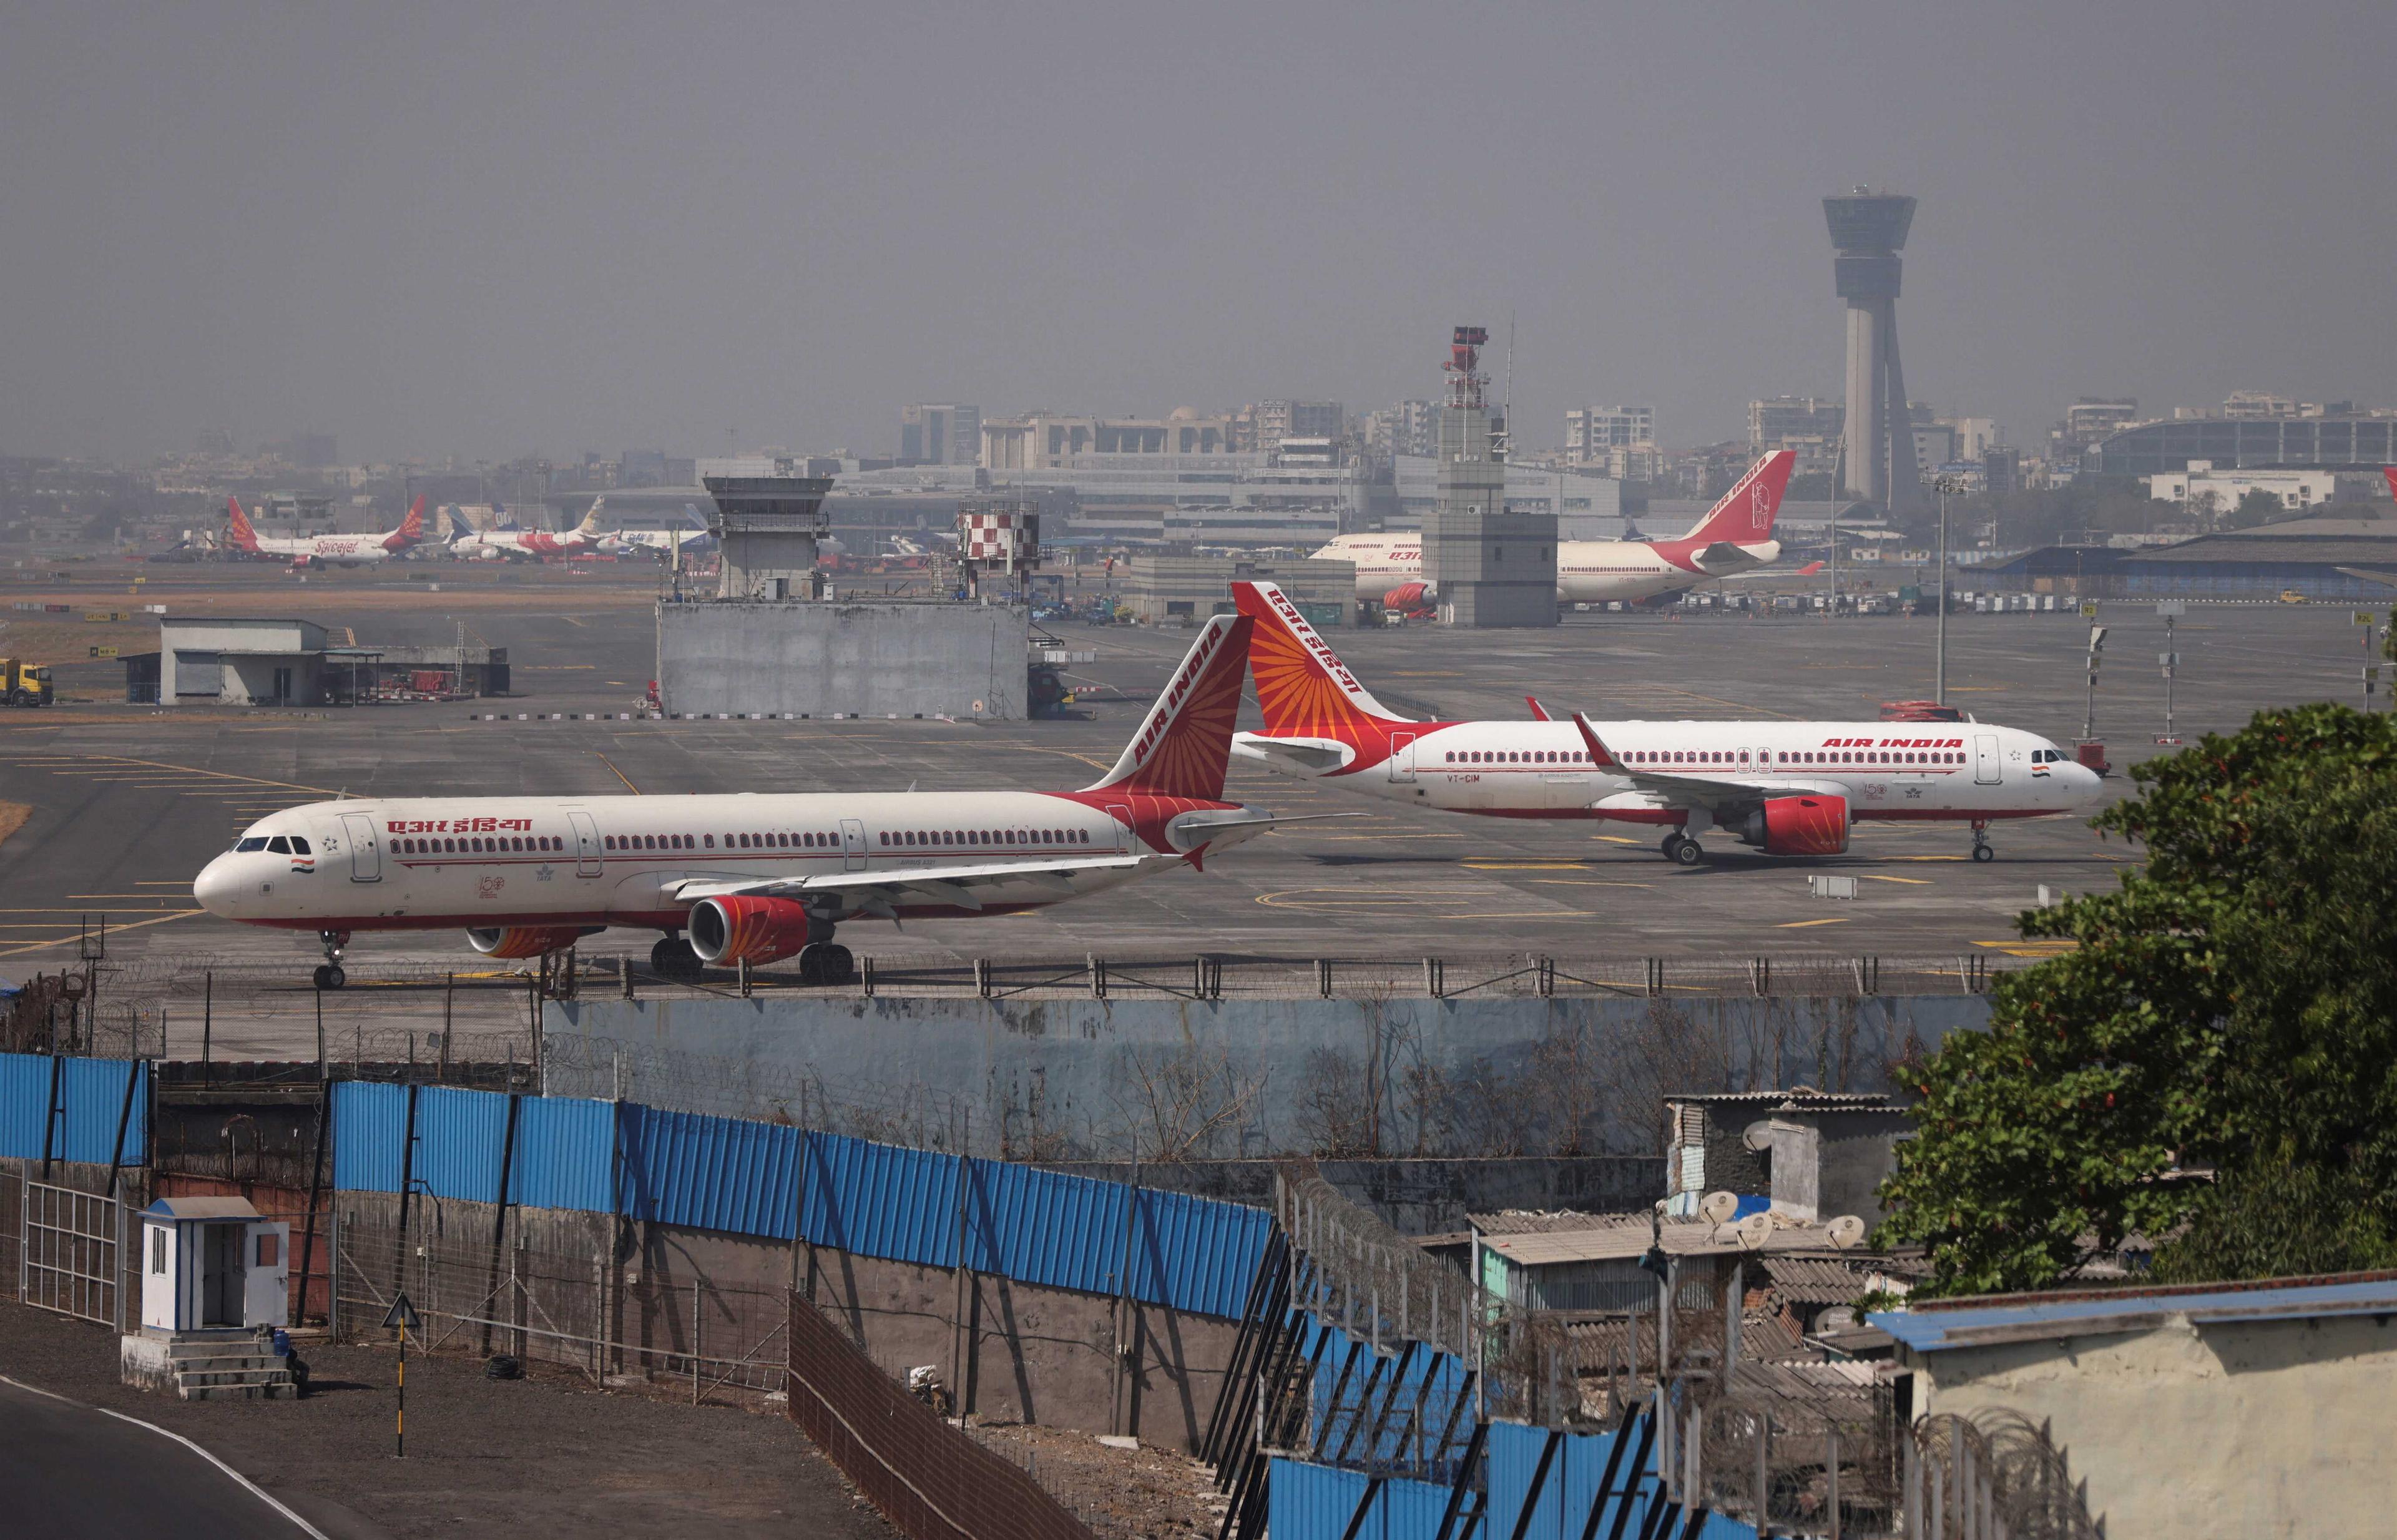 Air India passenger aircraft are seen on the tarmac at Chhatrapati Shivaji International airport in Mumbai, India, Feb 14. Photo: Reuters